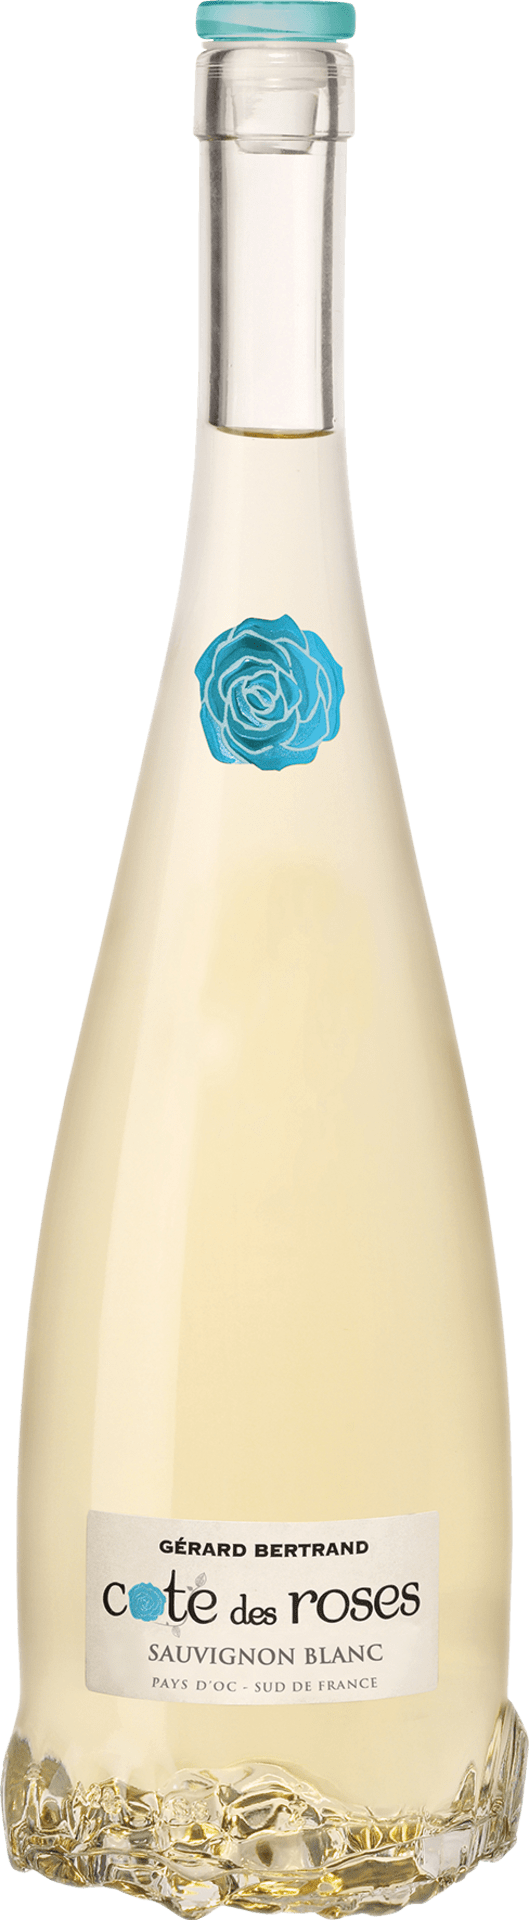 Cote des Roses Sauvignon Blanc